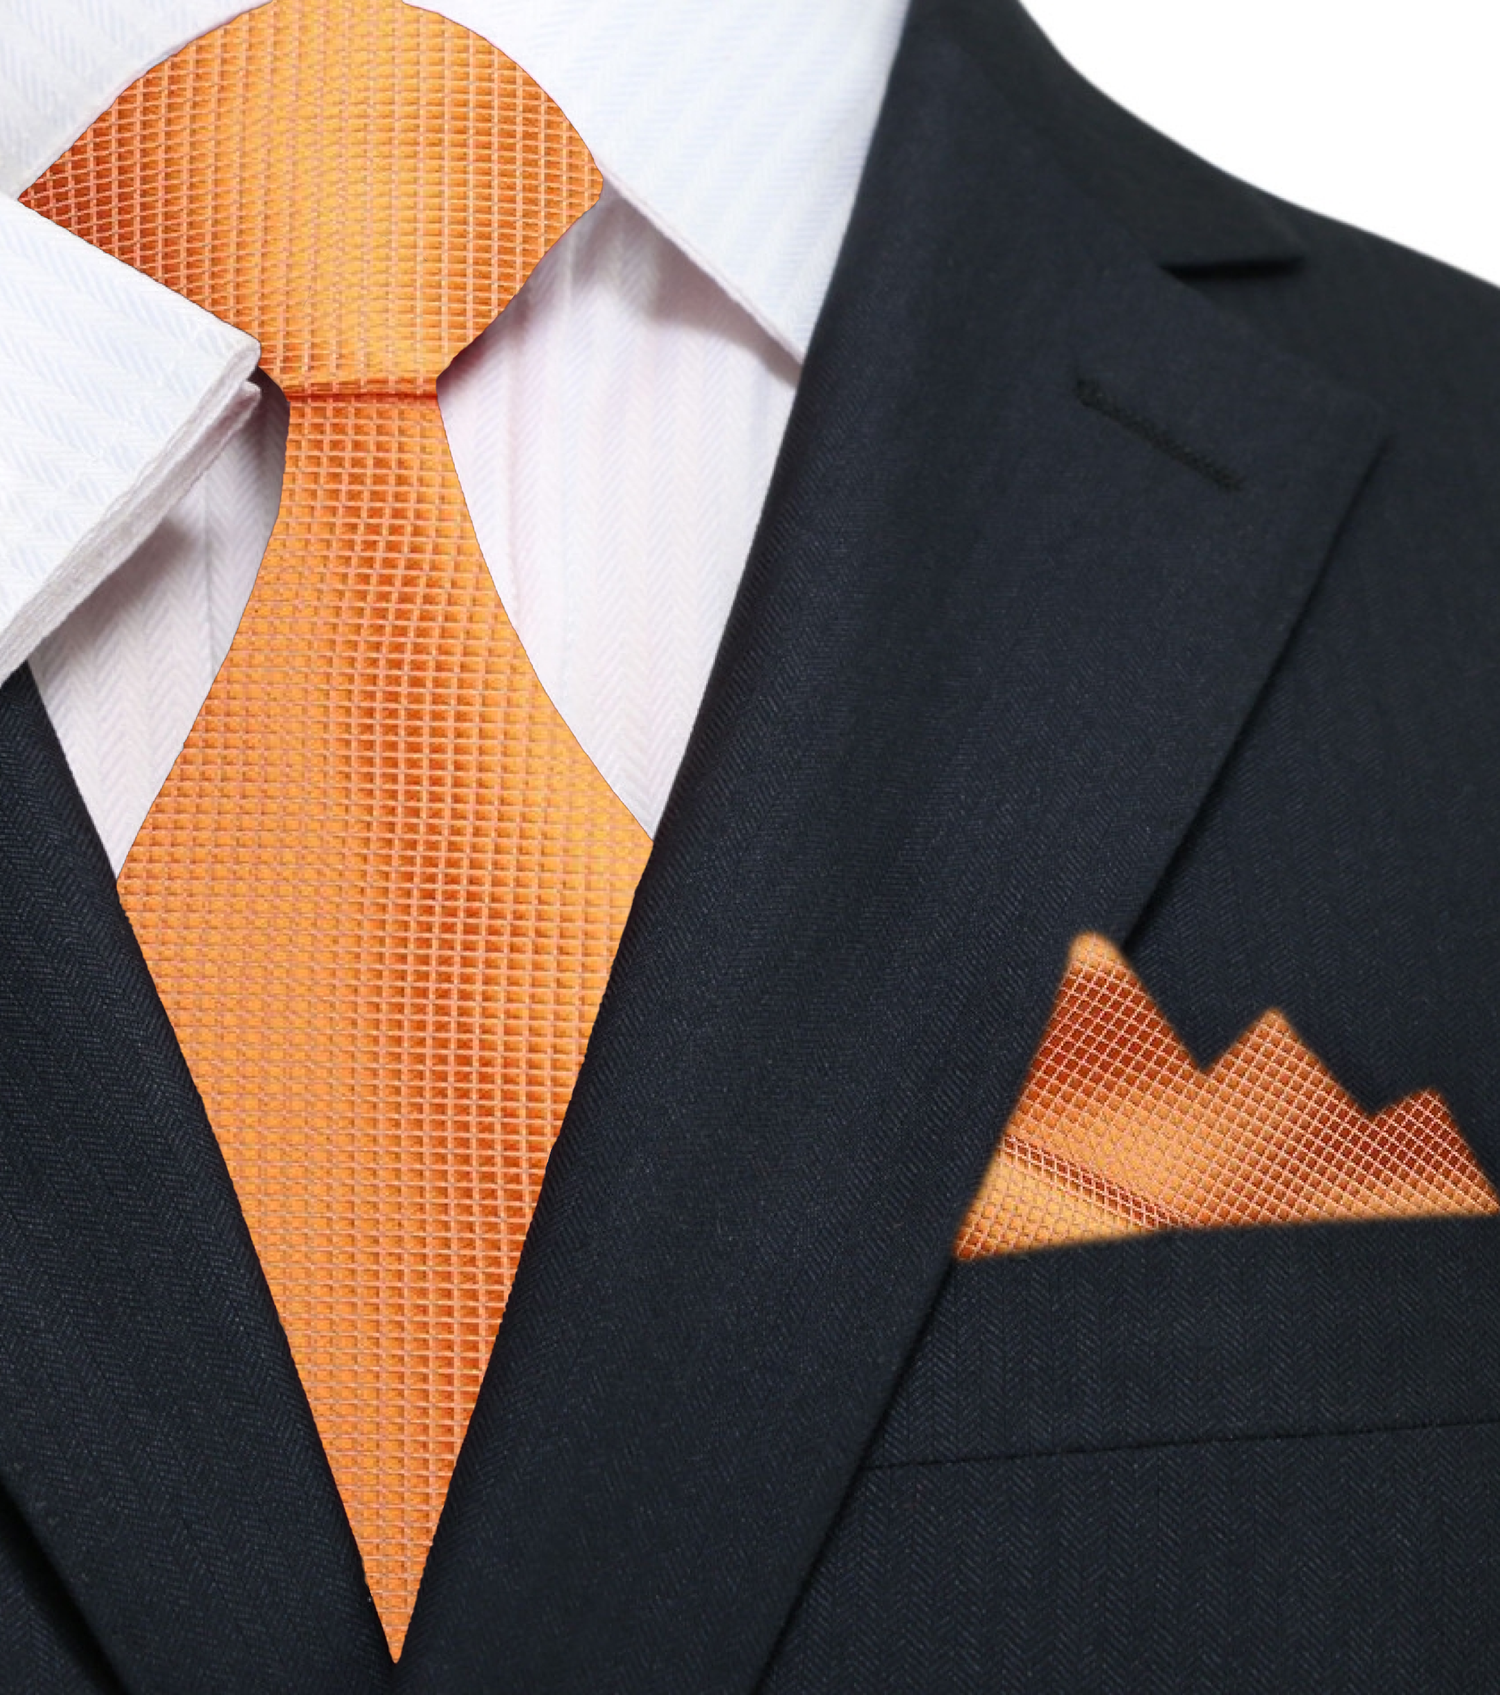 A Solid Orange With Check Texture Pattern Silk Necktie, Matching Pocket Square||Orange